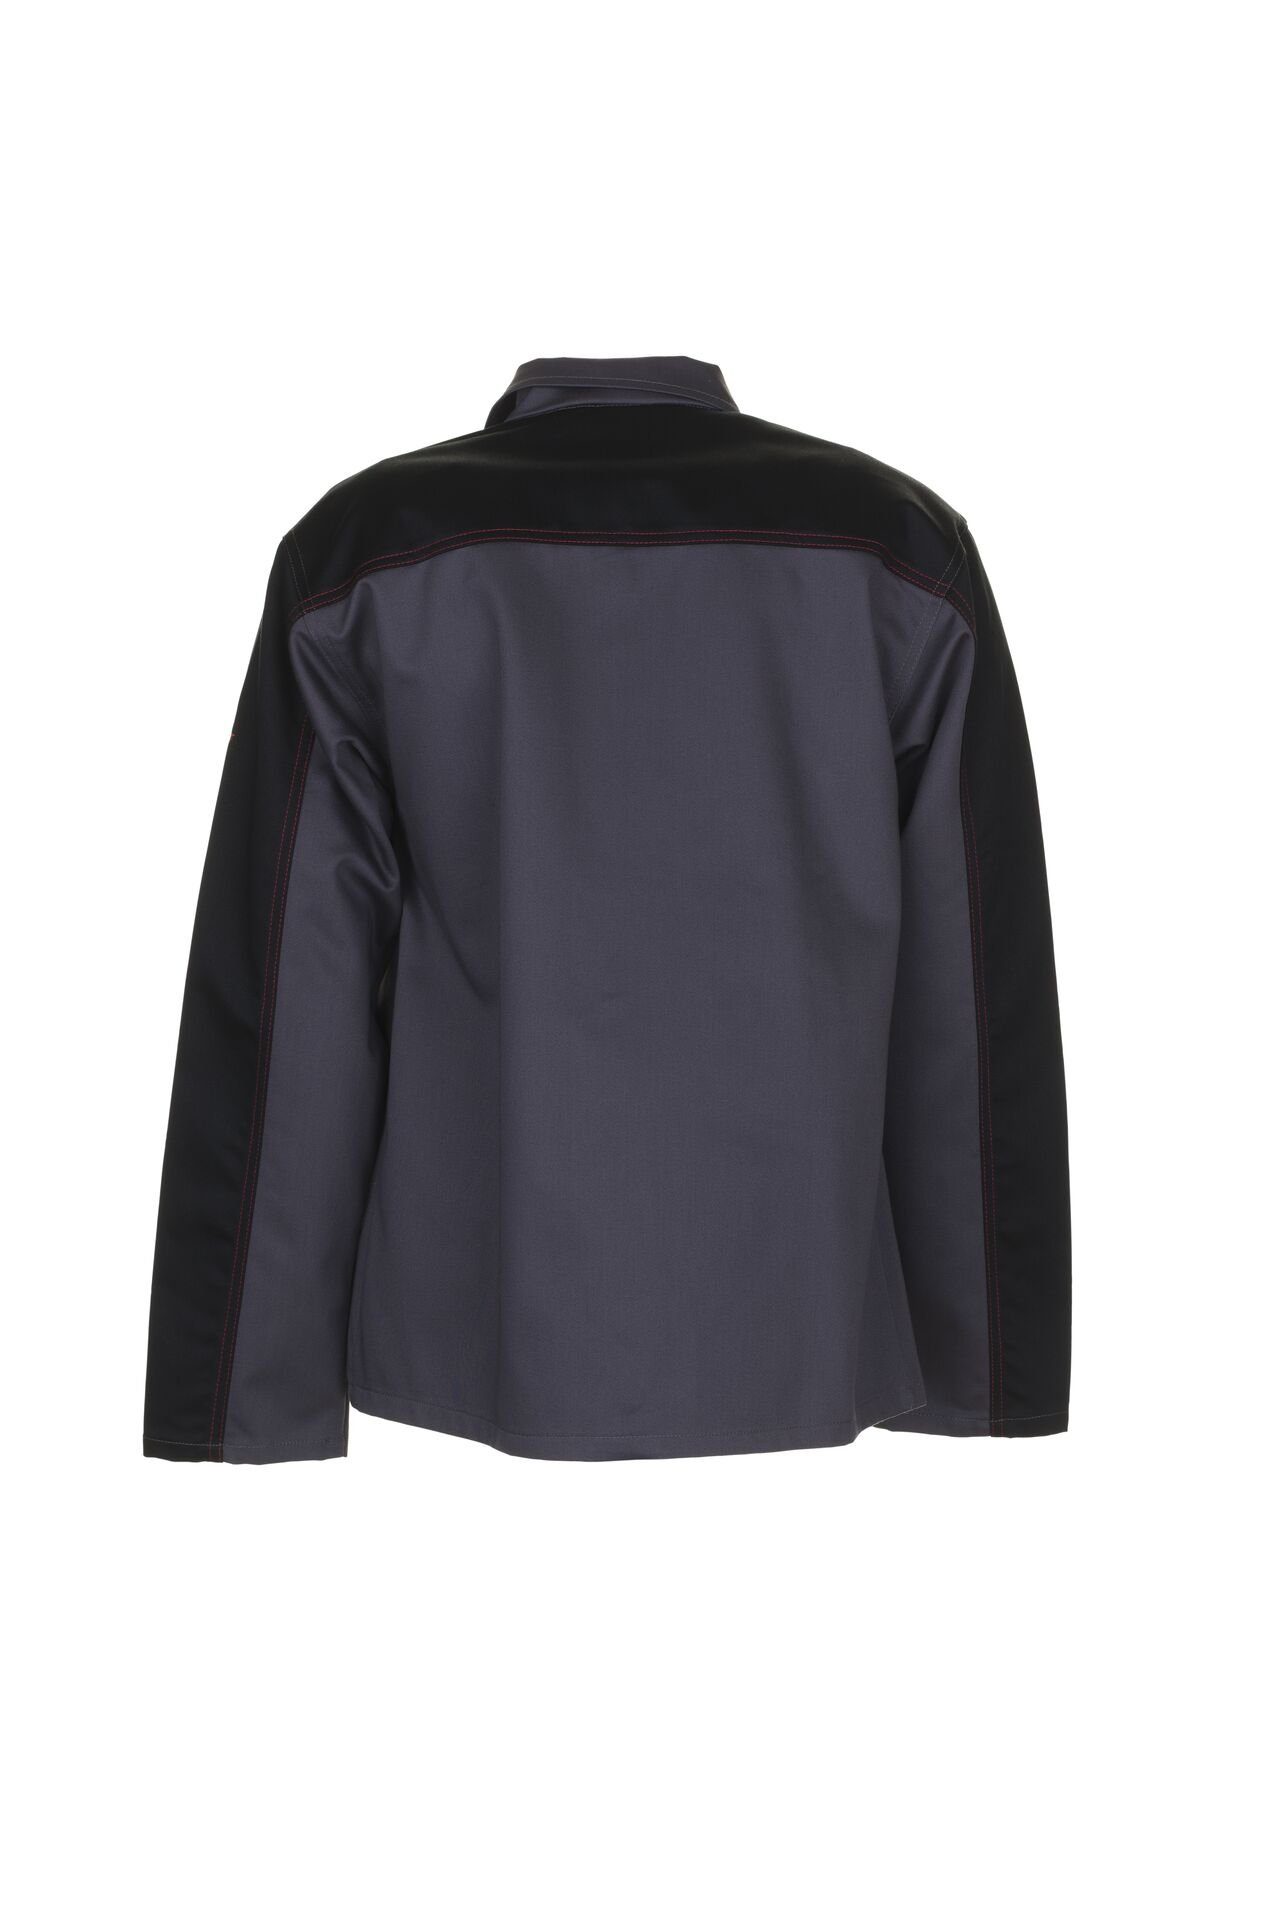 Planam Arbeitshose Jacke Weld Shield grau/schwarz Größe 56 (1-tlg)